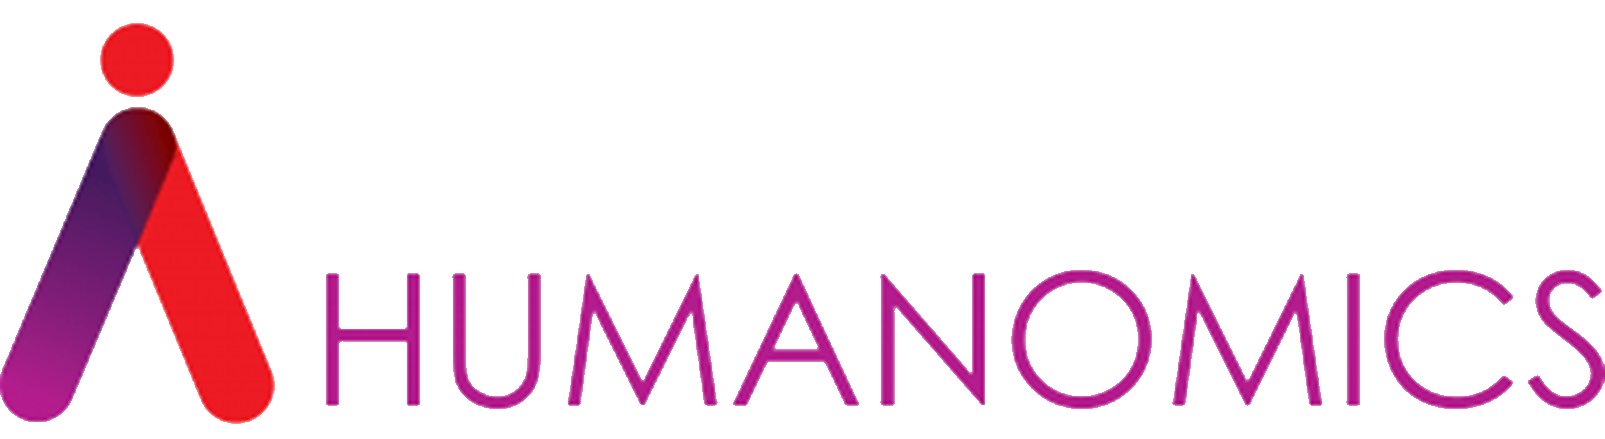 Humanomics Logo